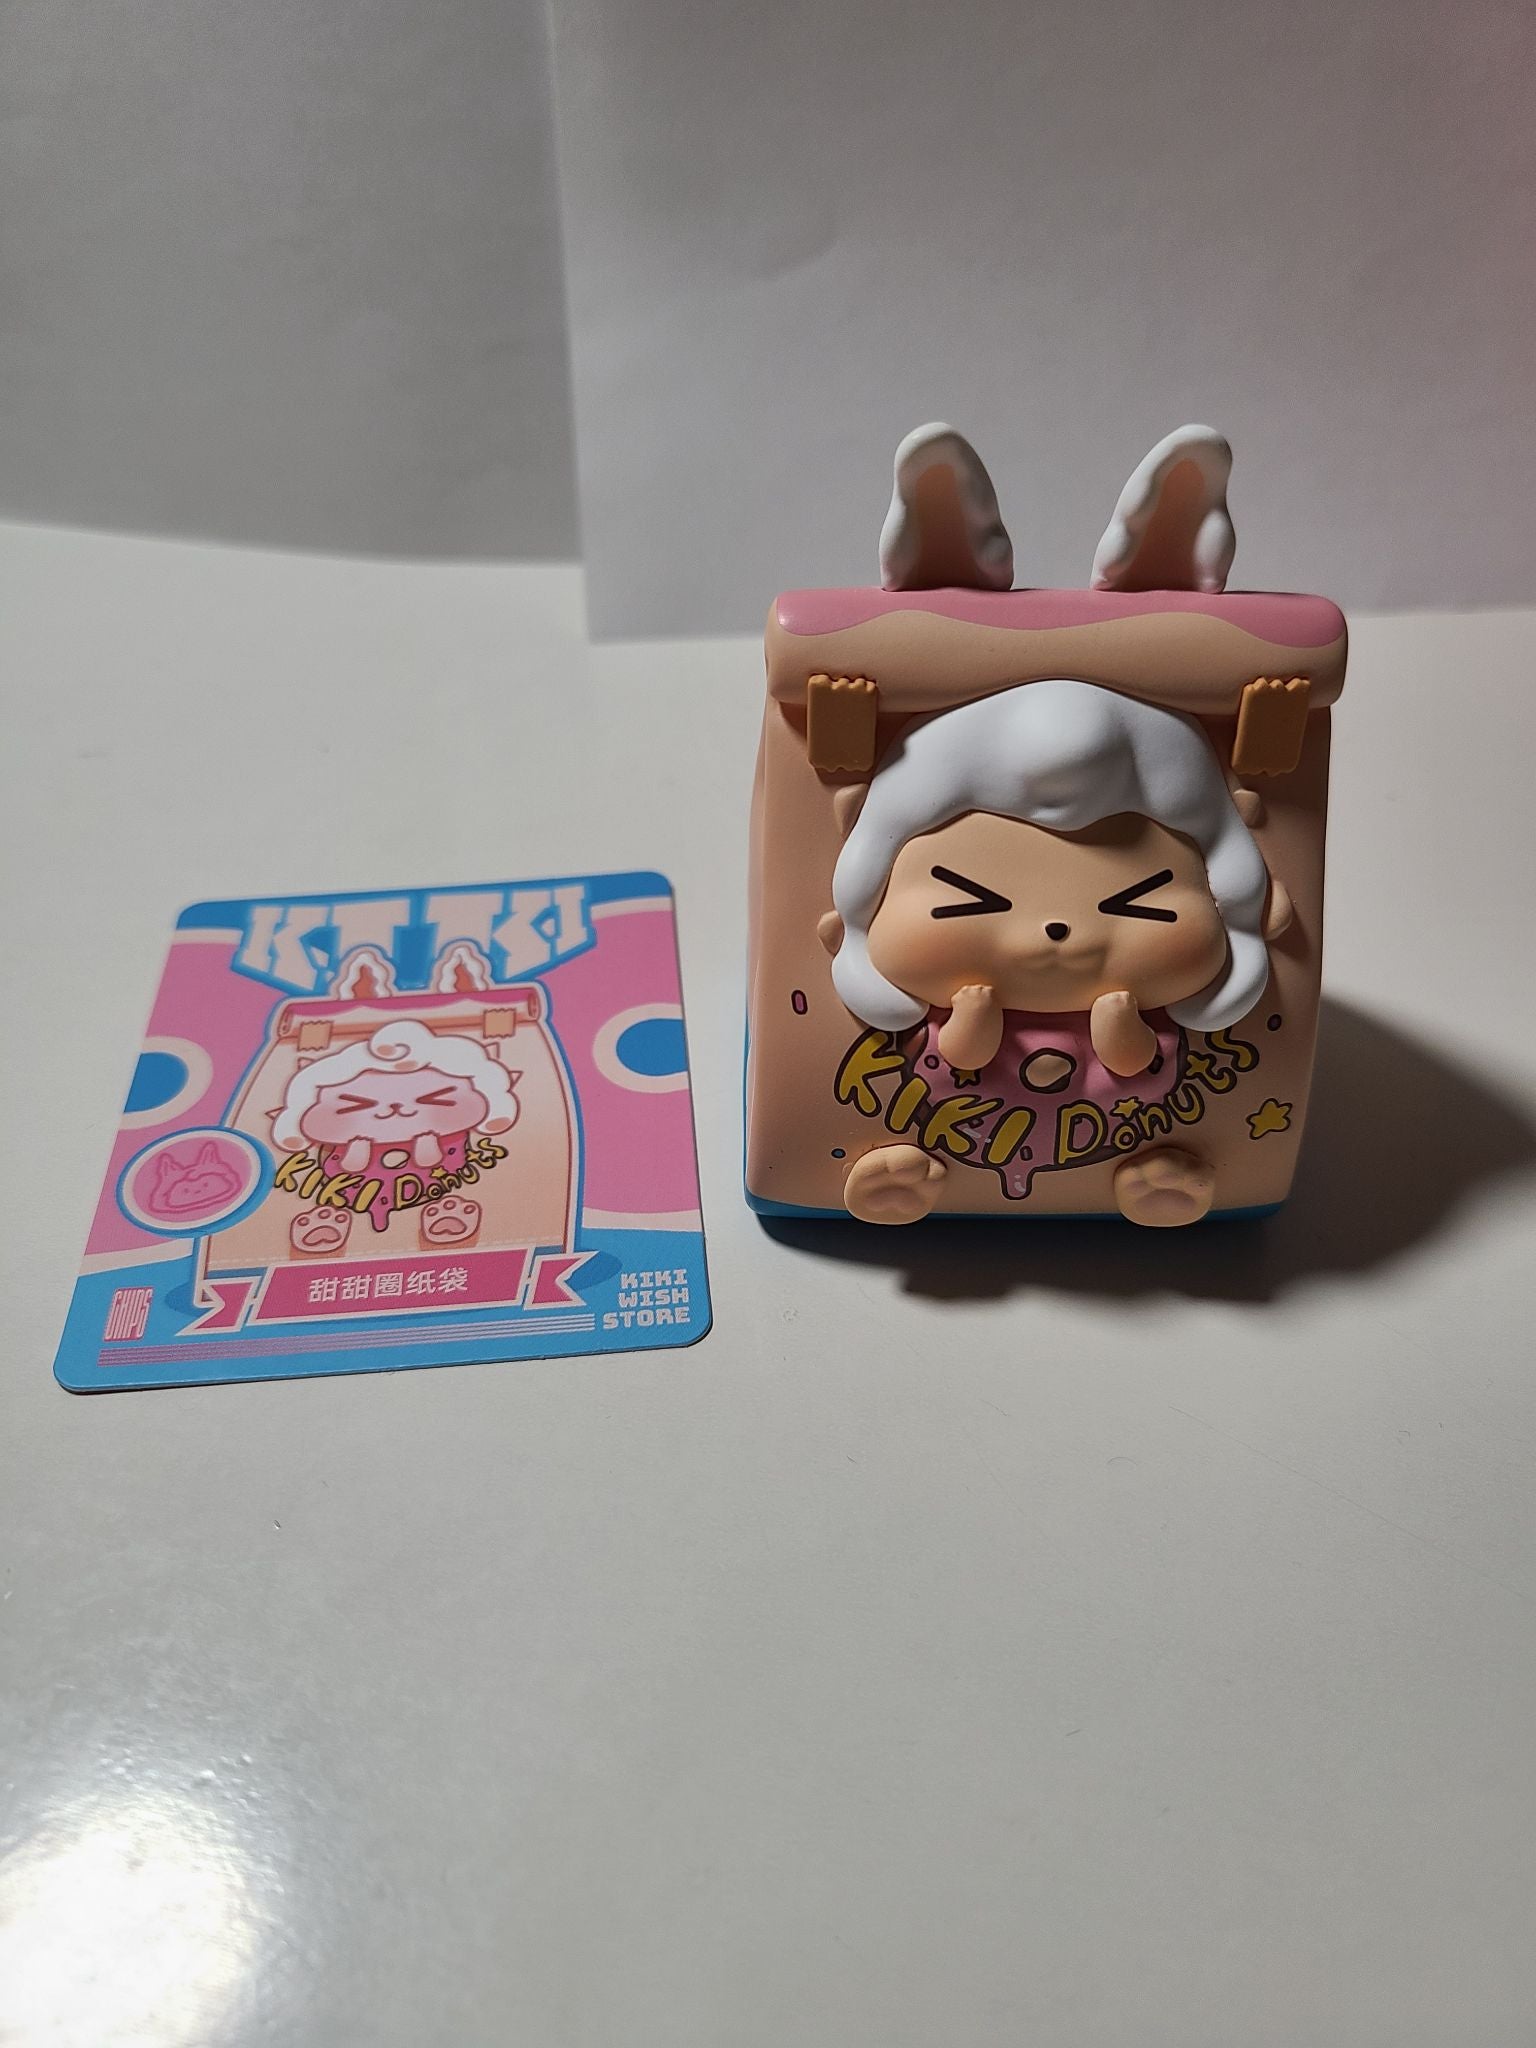 Bag of Donuts - Kiki Wish Store by Hey Dolls  - 3